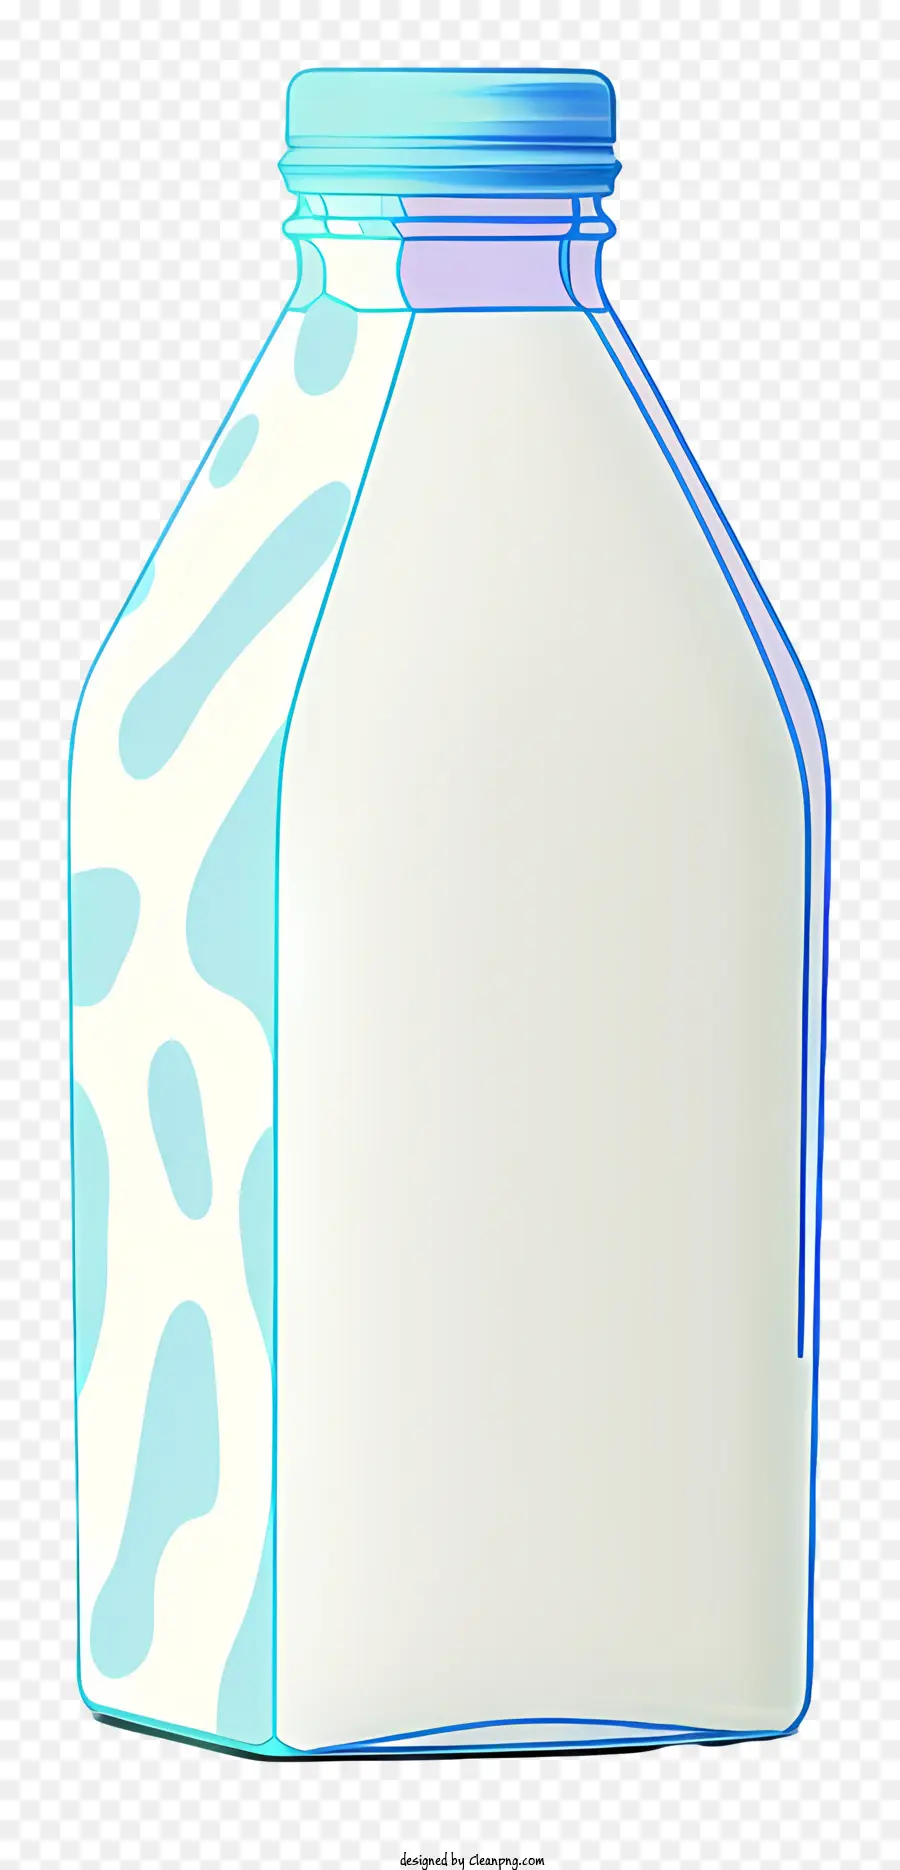 glass bottle milk blue cap clear glass plastic cap